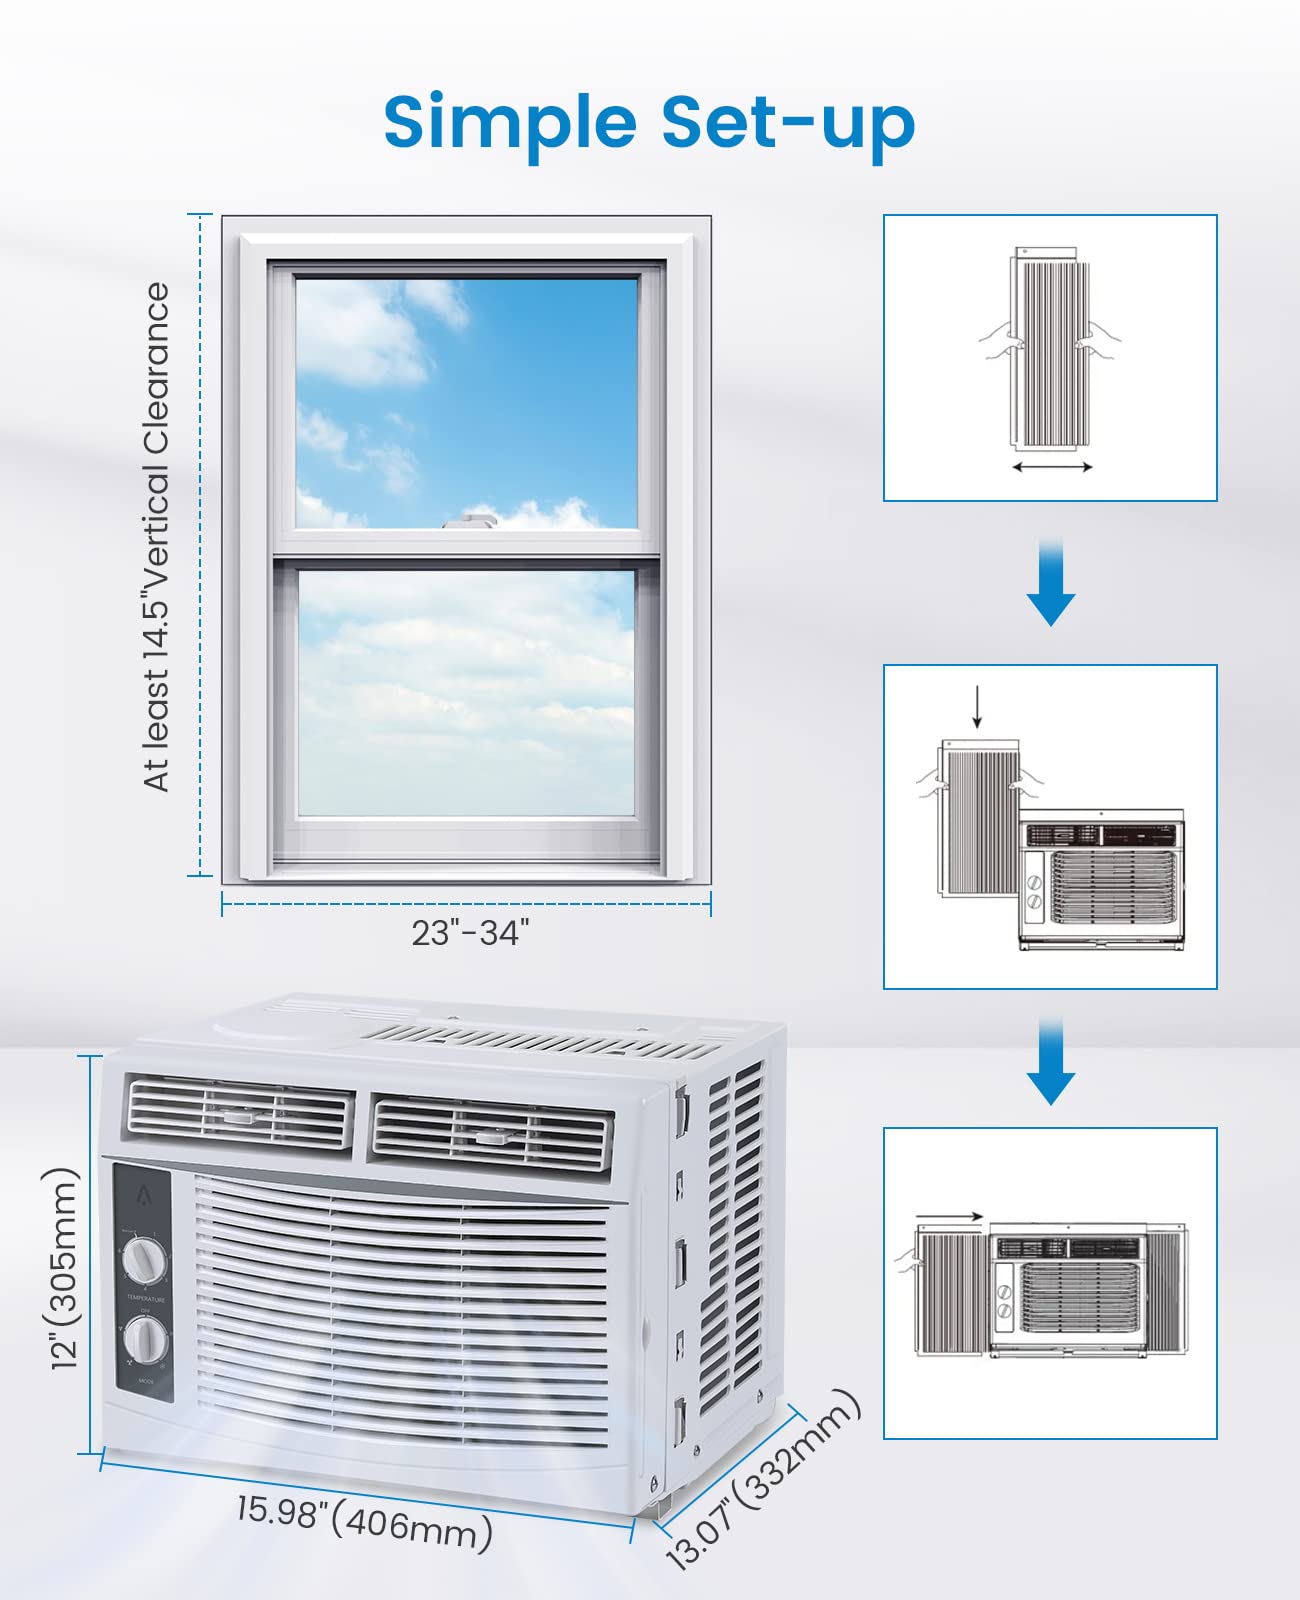 5000 BTU AC Unit, Window Unit with Reusable Filter & Controls